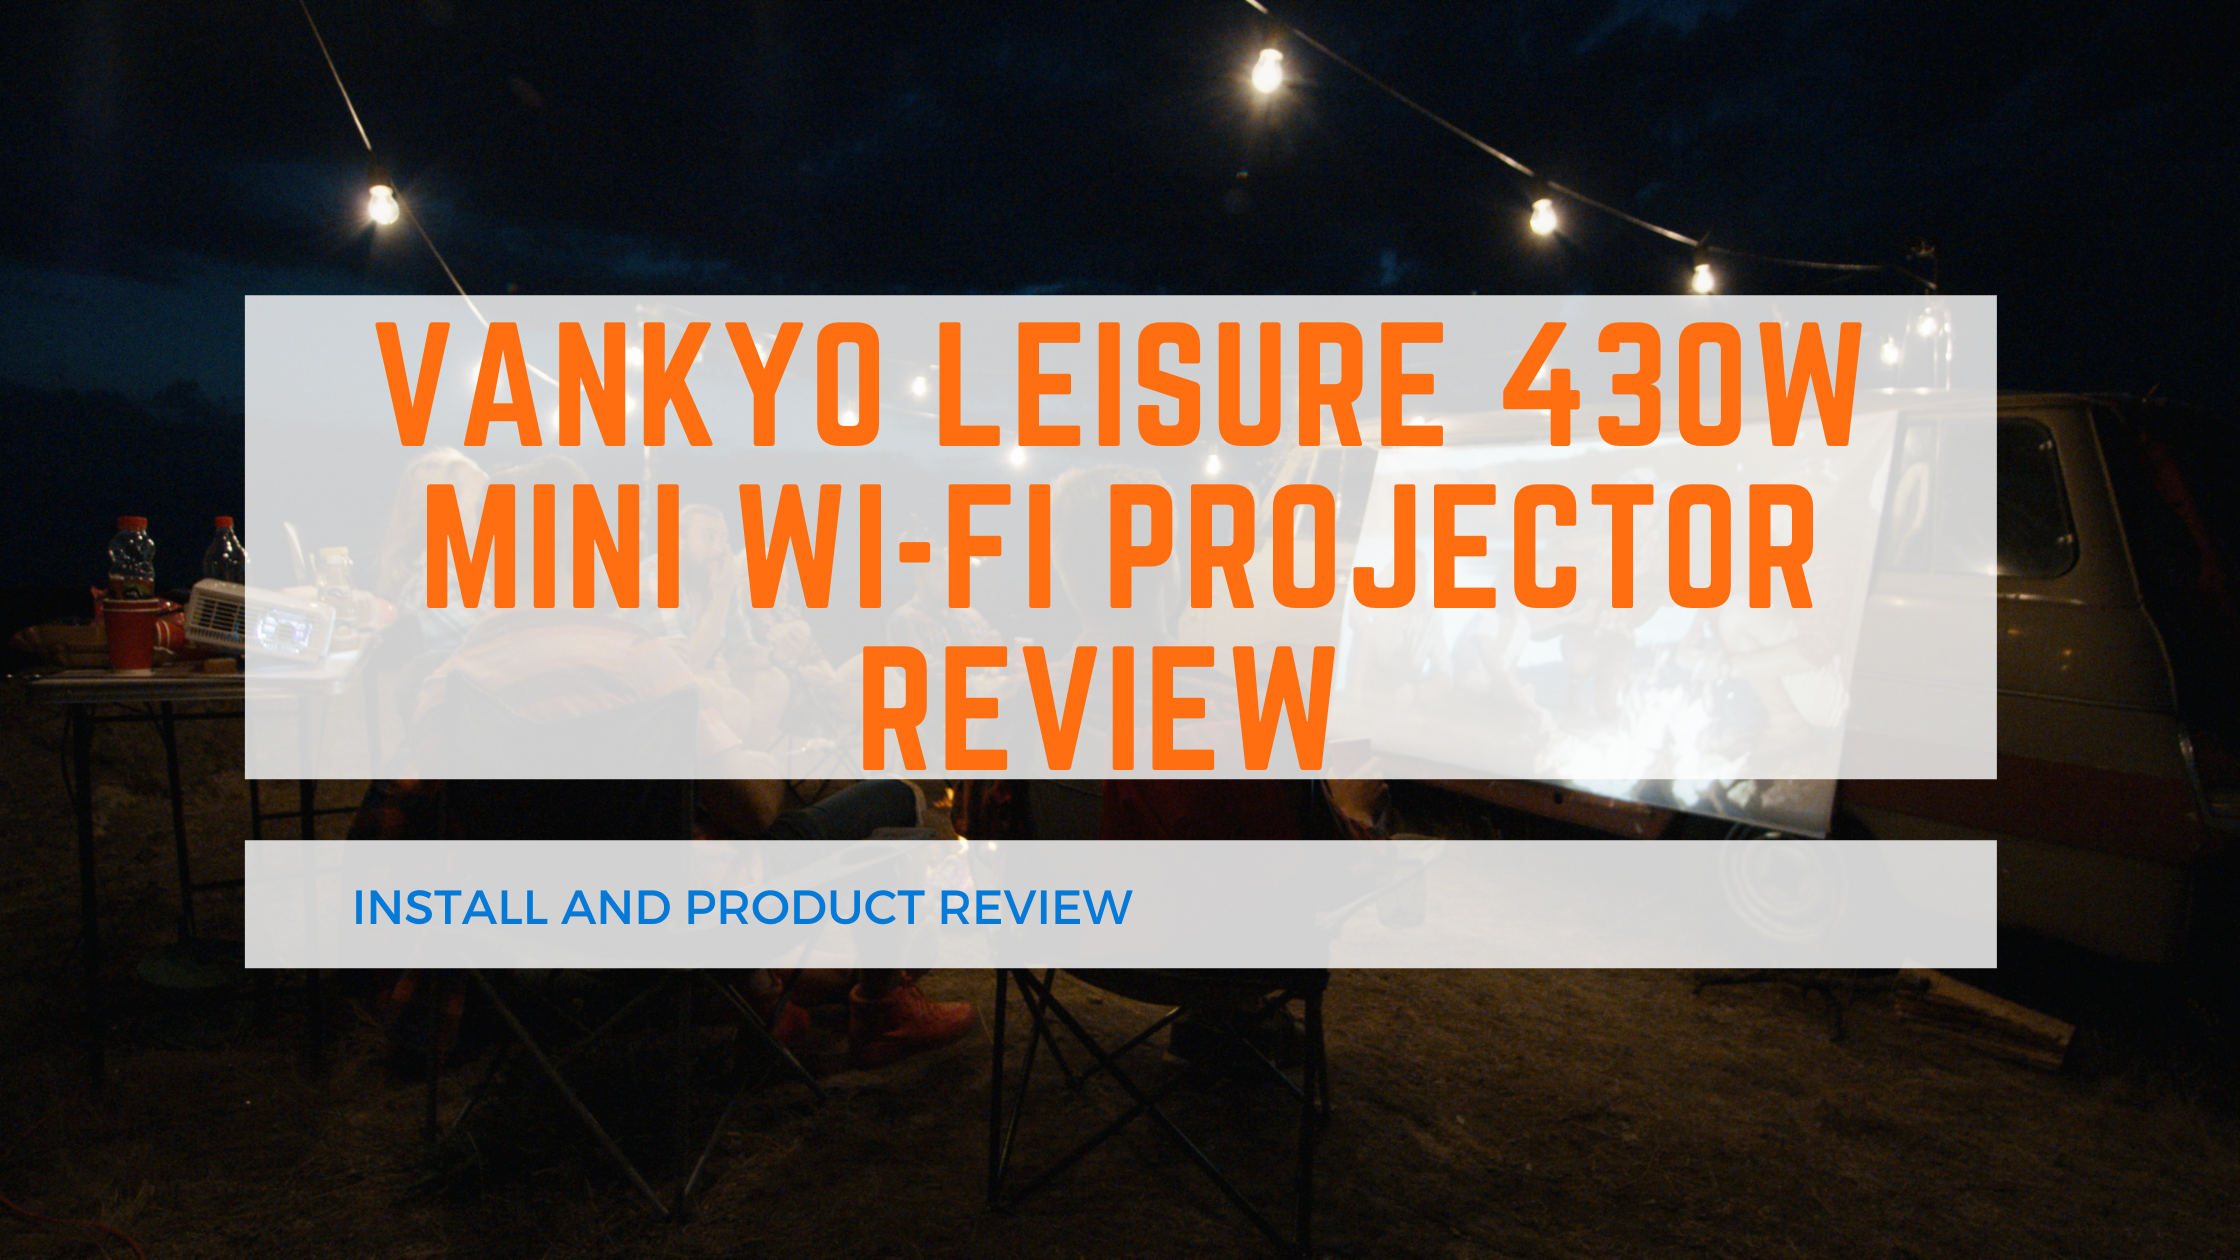 Vankyo Leisure 430W Mini WiFi Projector Review